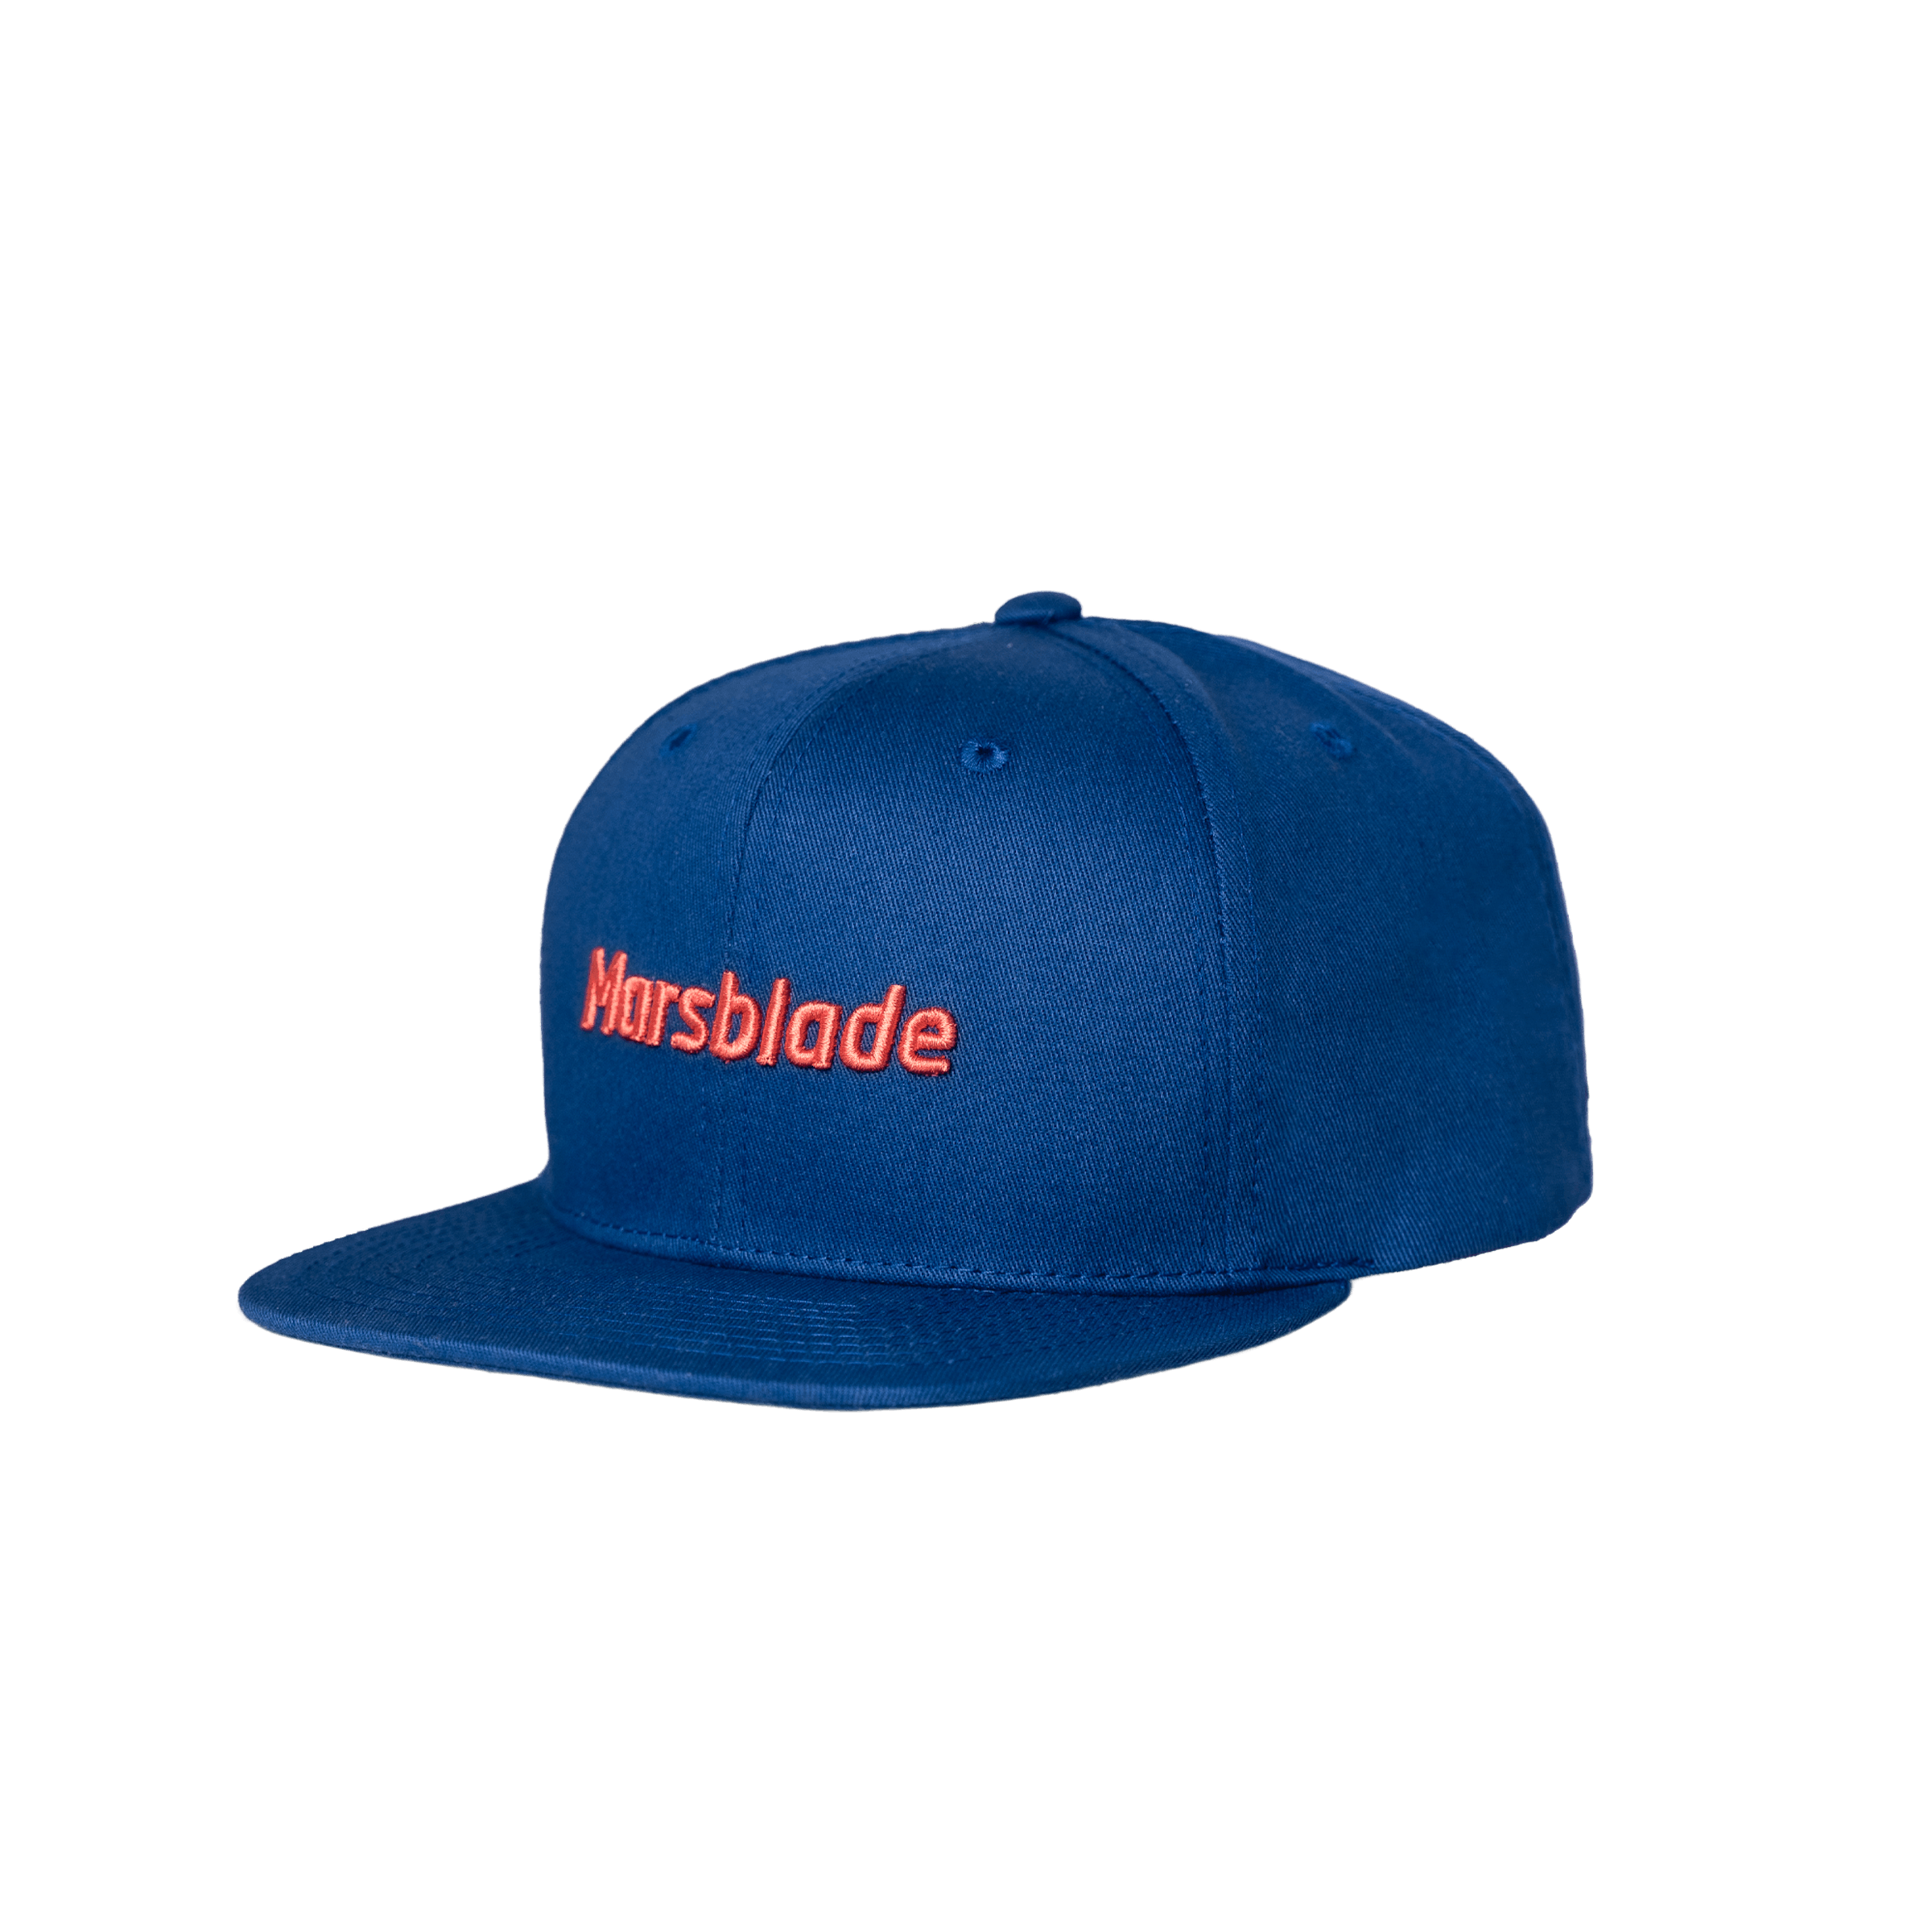 Marsblade Cap blue